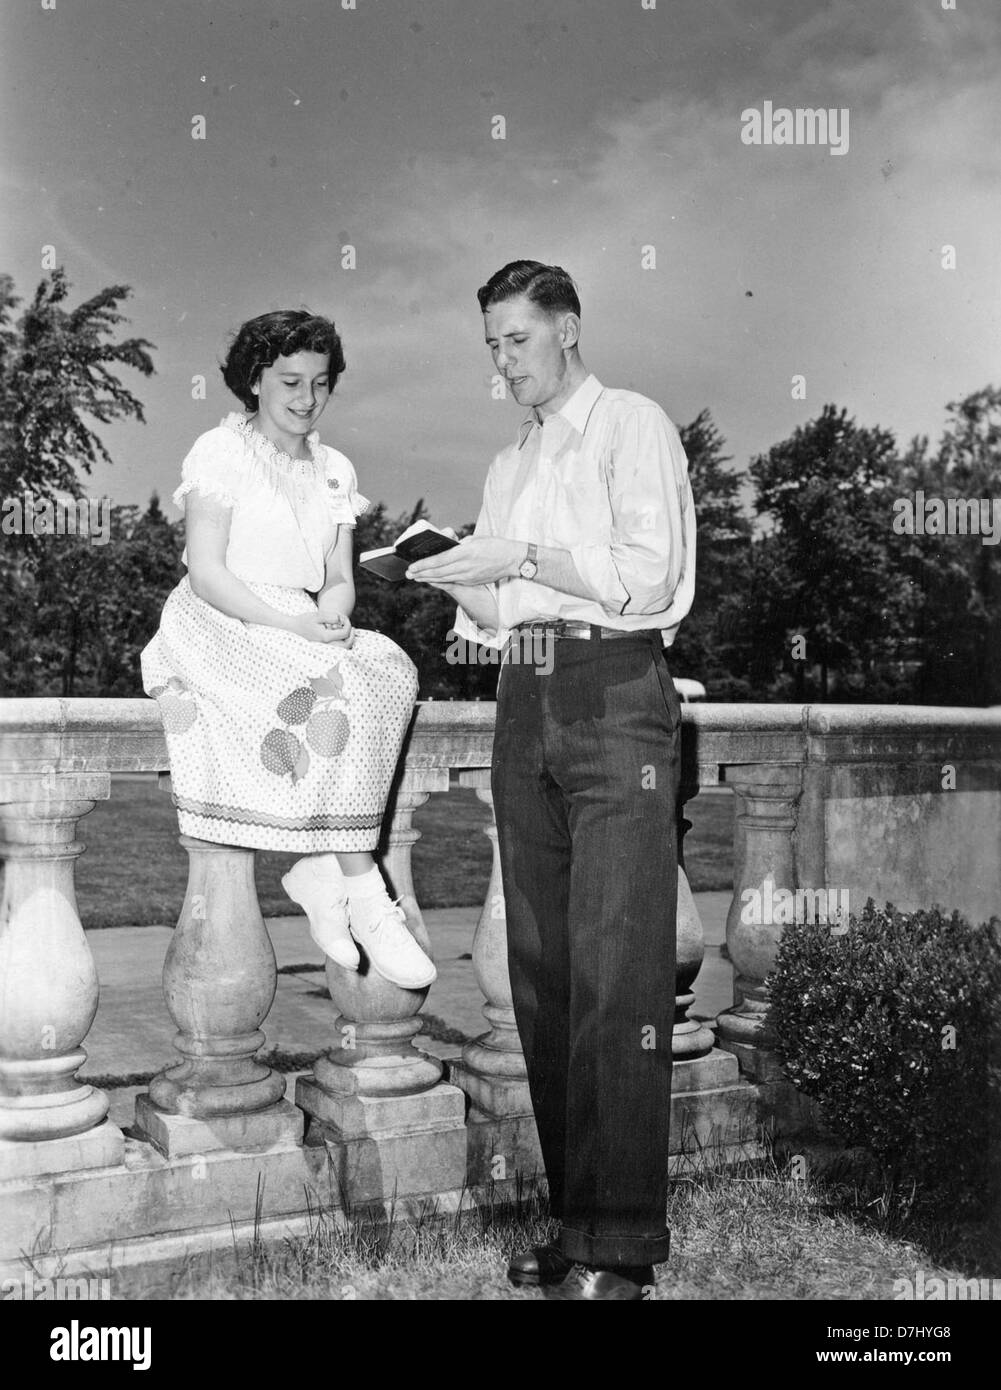 Louise Johnson talks with Walter Schroeder, 1950 Stock Photo